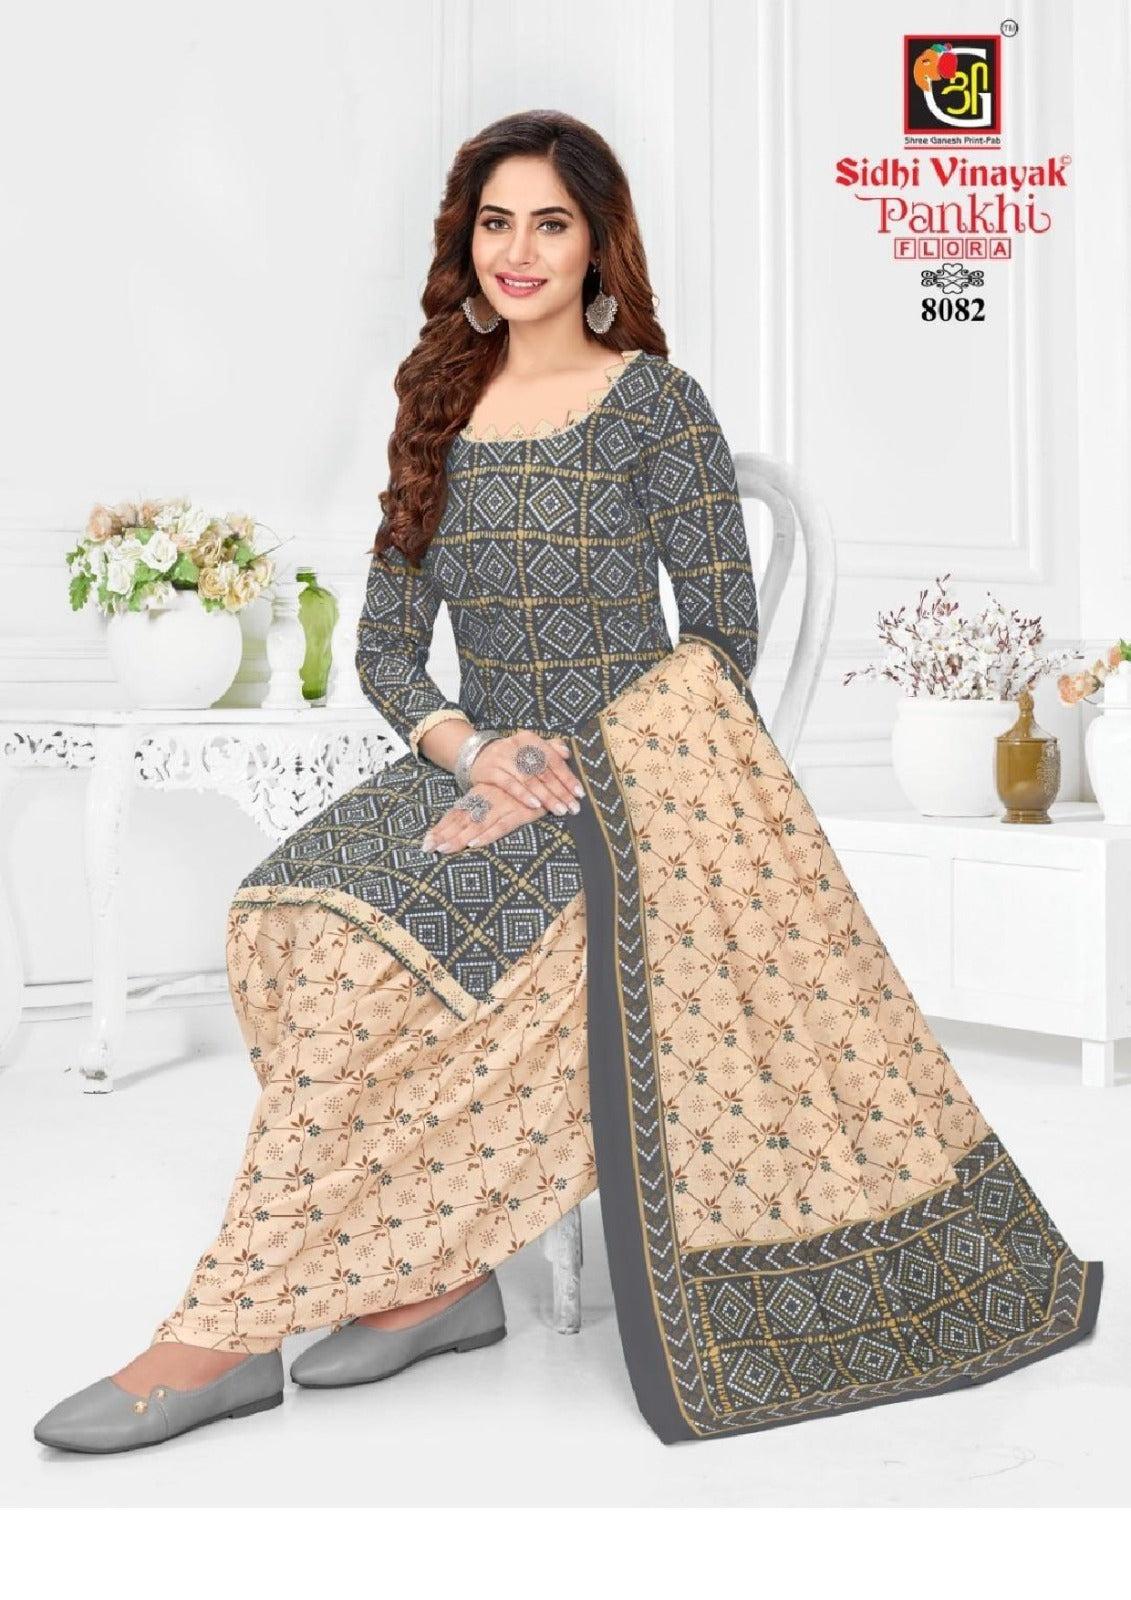 Pankhi Flora Sidhi Vinayak Cotton Dress Material